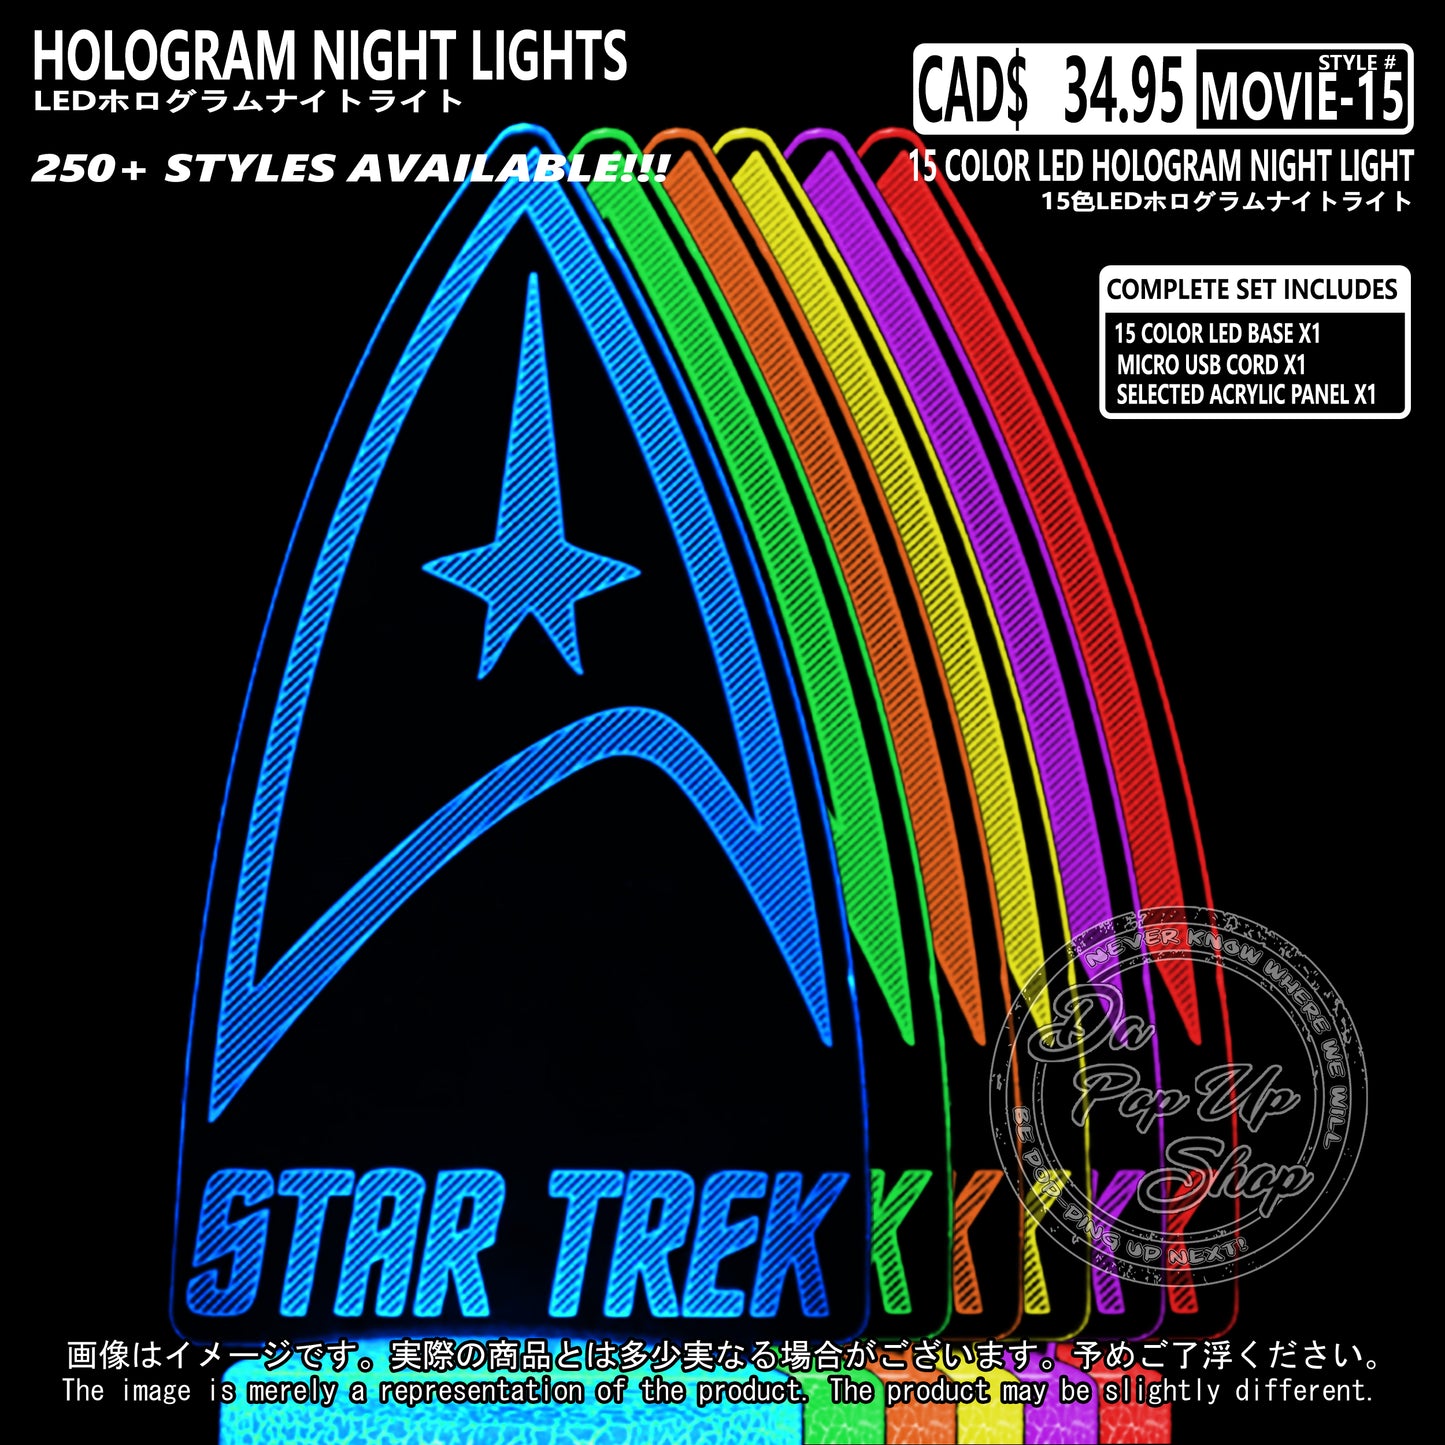 (MOVIE-15) Star Trek Hologram LED Night Light